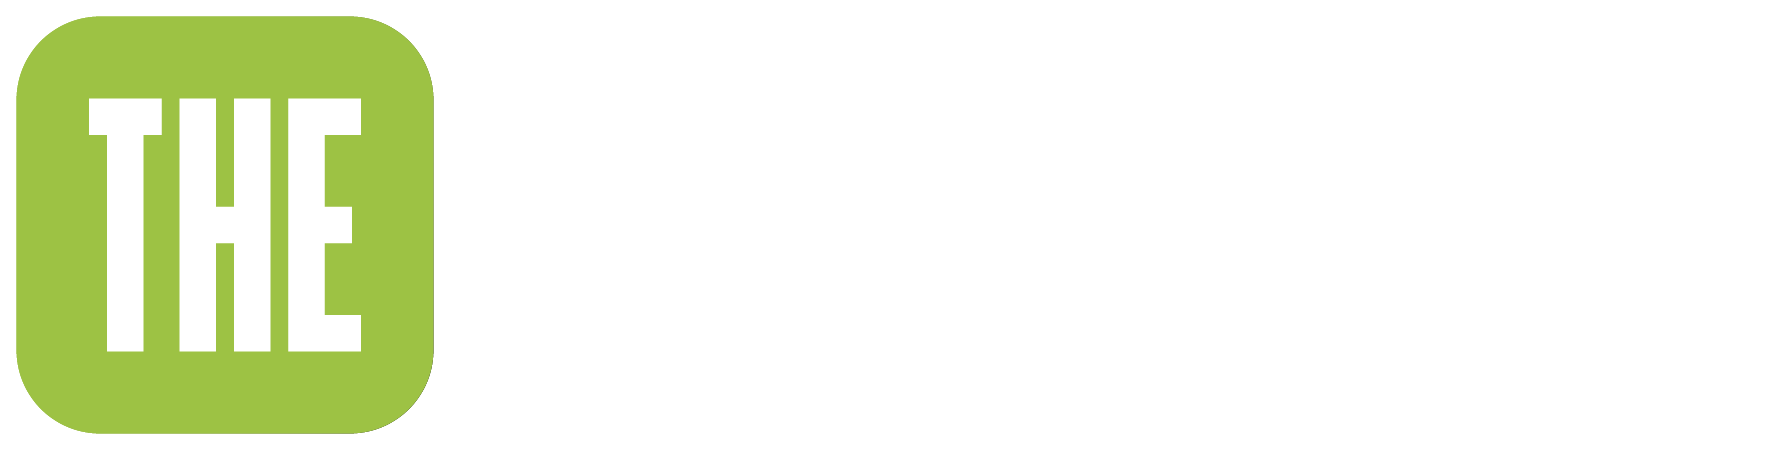 THE World 100 Reputation Network logo